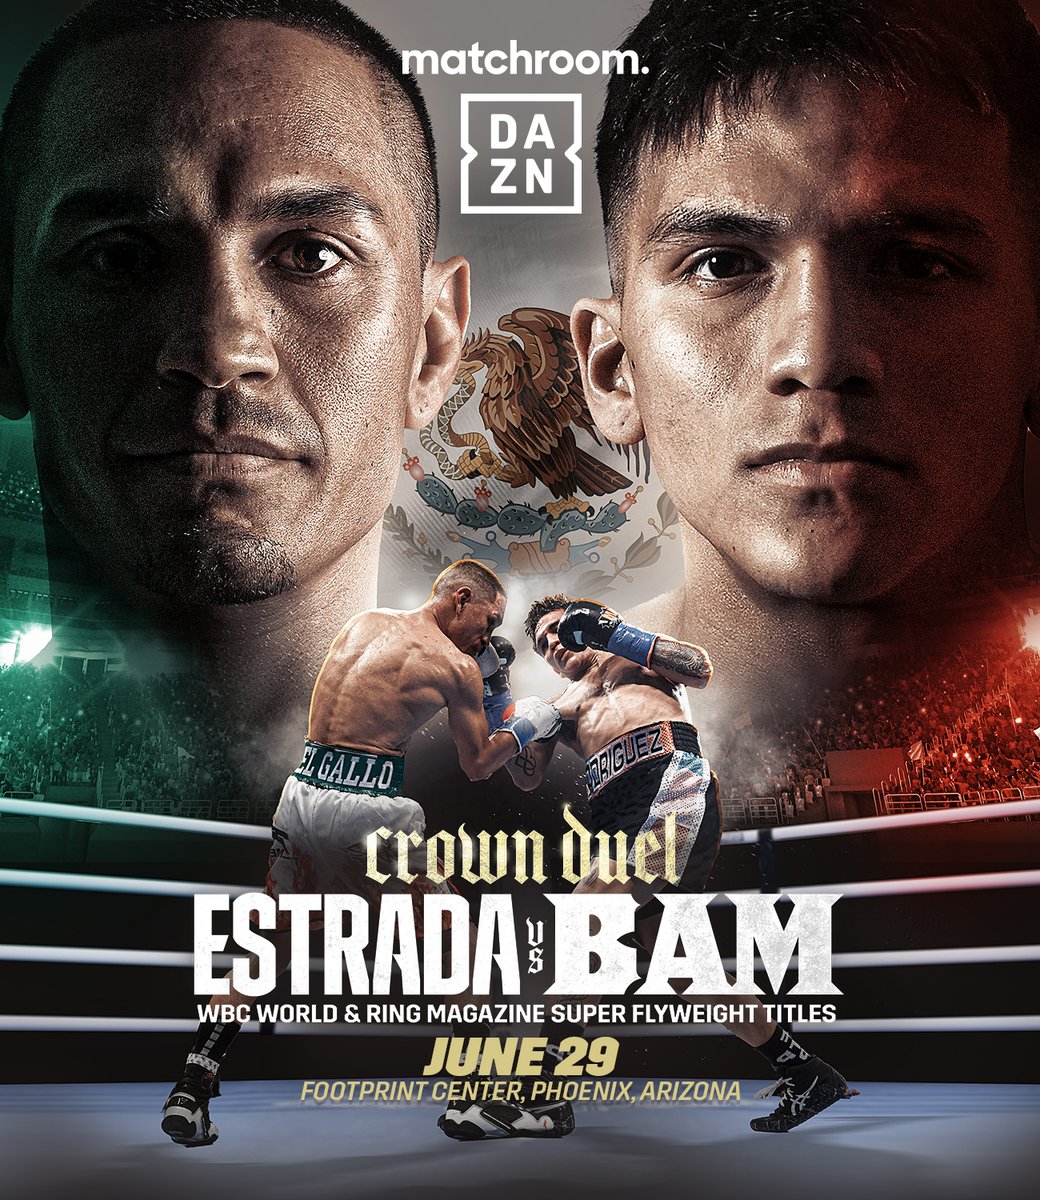 𝐄𝐒𝐓𝐑𝐀𝐃𝐀. 𝐁𝐀𝐌. 𝐄𝐏𝐈𝐂. @GalloEstradaOfi defends his WBC and @ringmagazine Super-Flyweight titles against @210bam, June 29, live on DAZN worldwide 👑 #EstradaBam